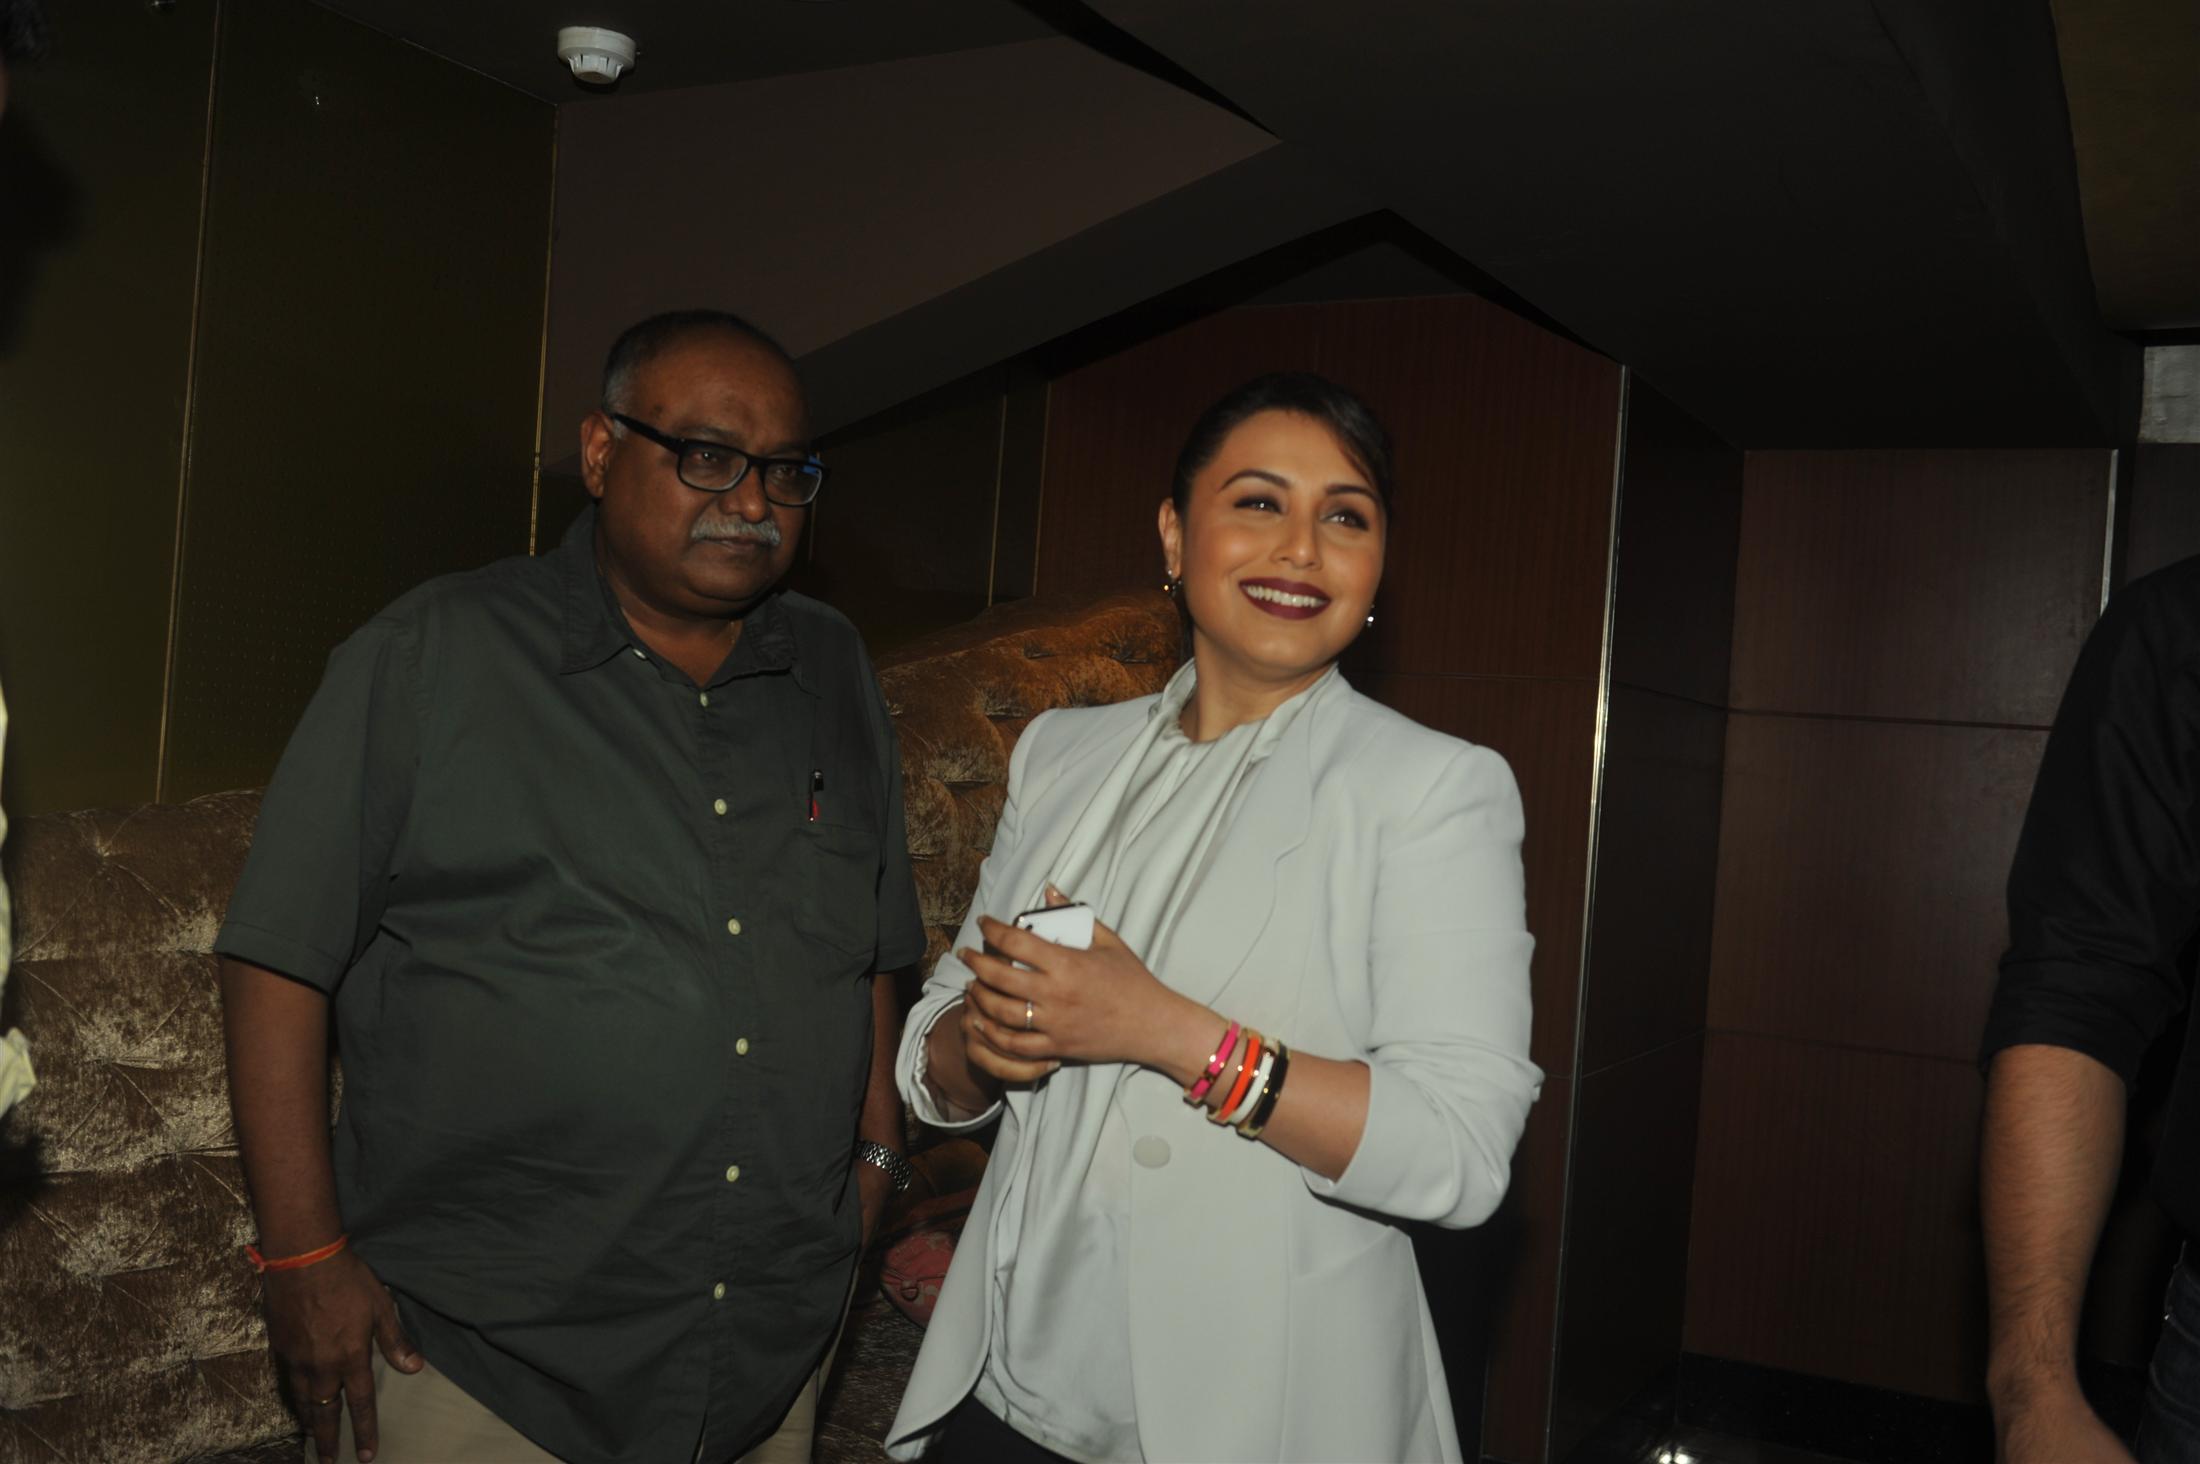 Rani Mukerji Launch Mardaani Movie Anthem